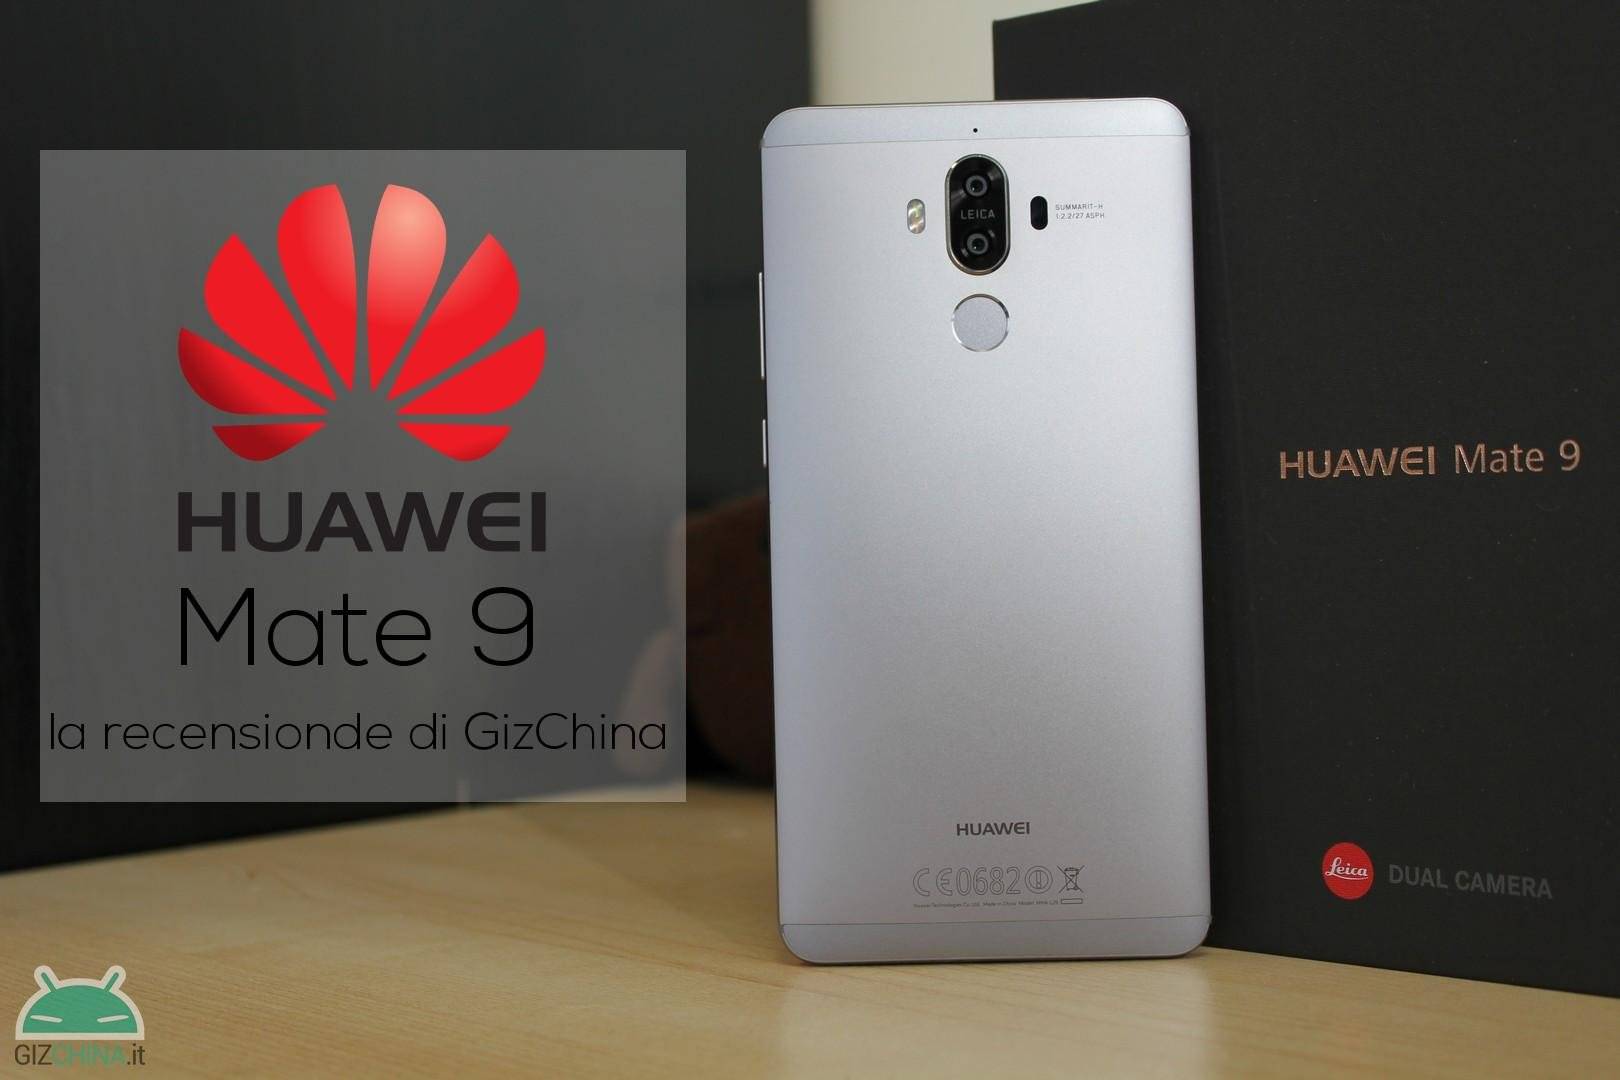 Huawei mate 9: обзор характеристик и возможностей